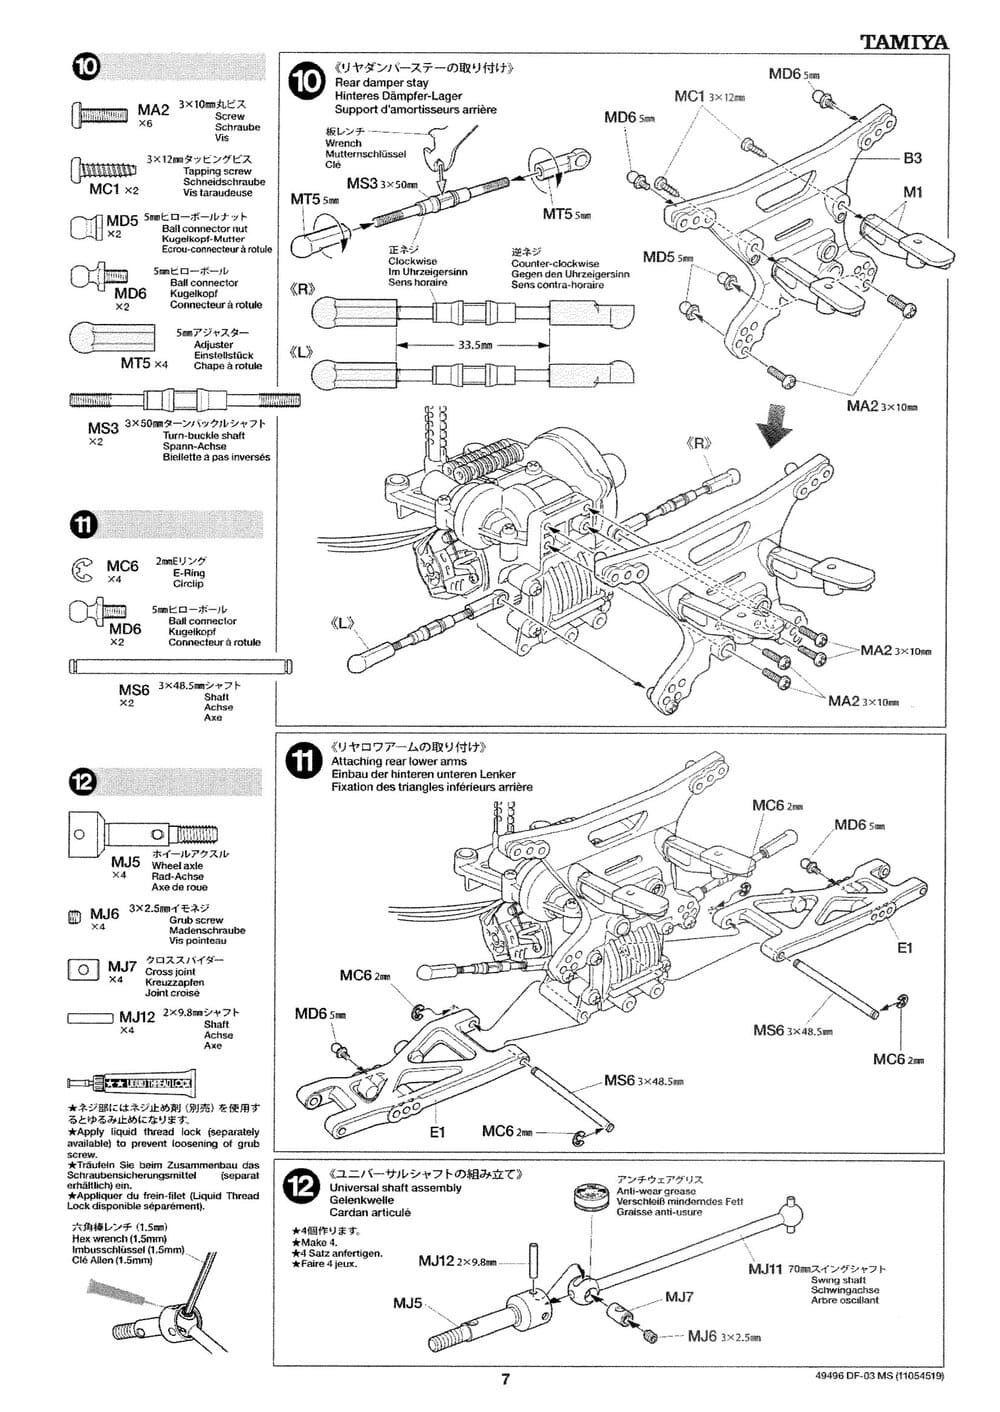 Tamiya - DF-03 MS Chassis Chassis - Manual - Page 7